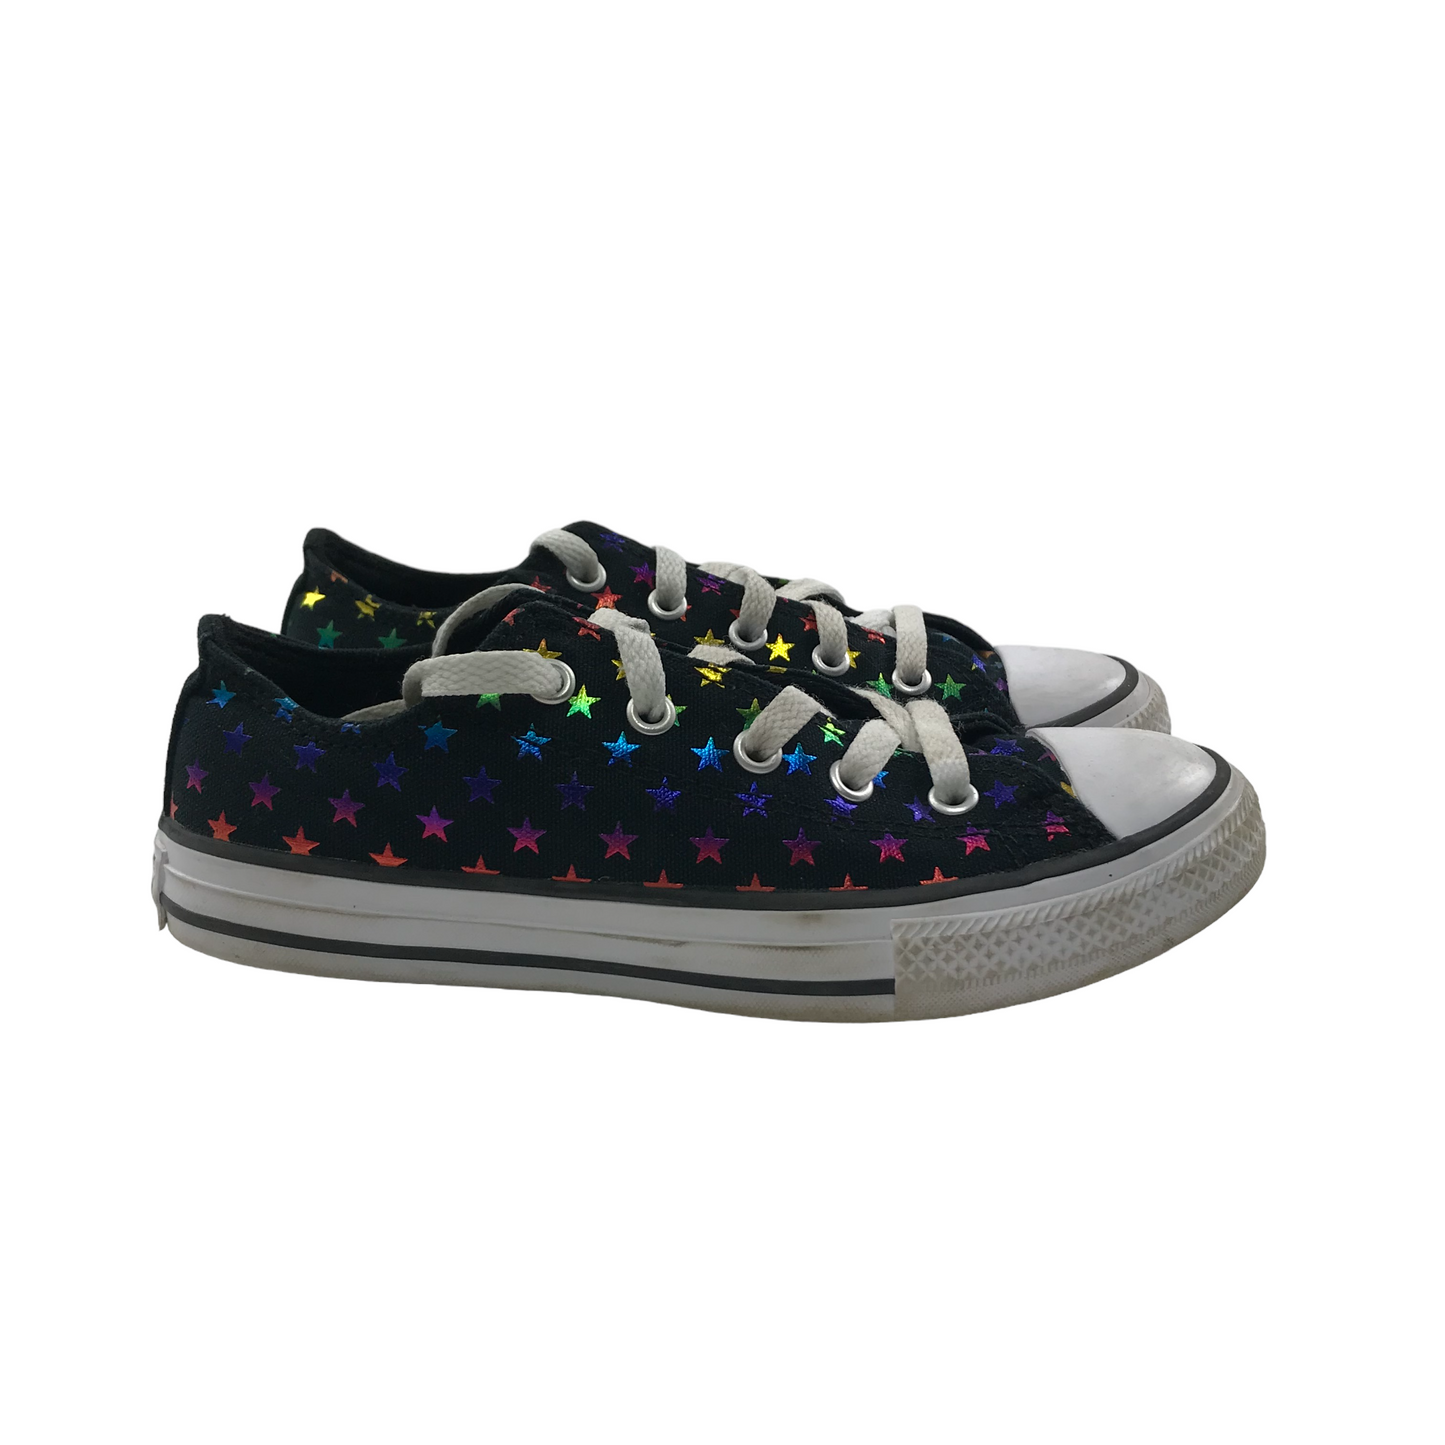 Converse Black Multicoloured Star Trainers Shoe Size 1